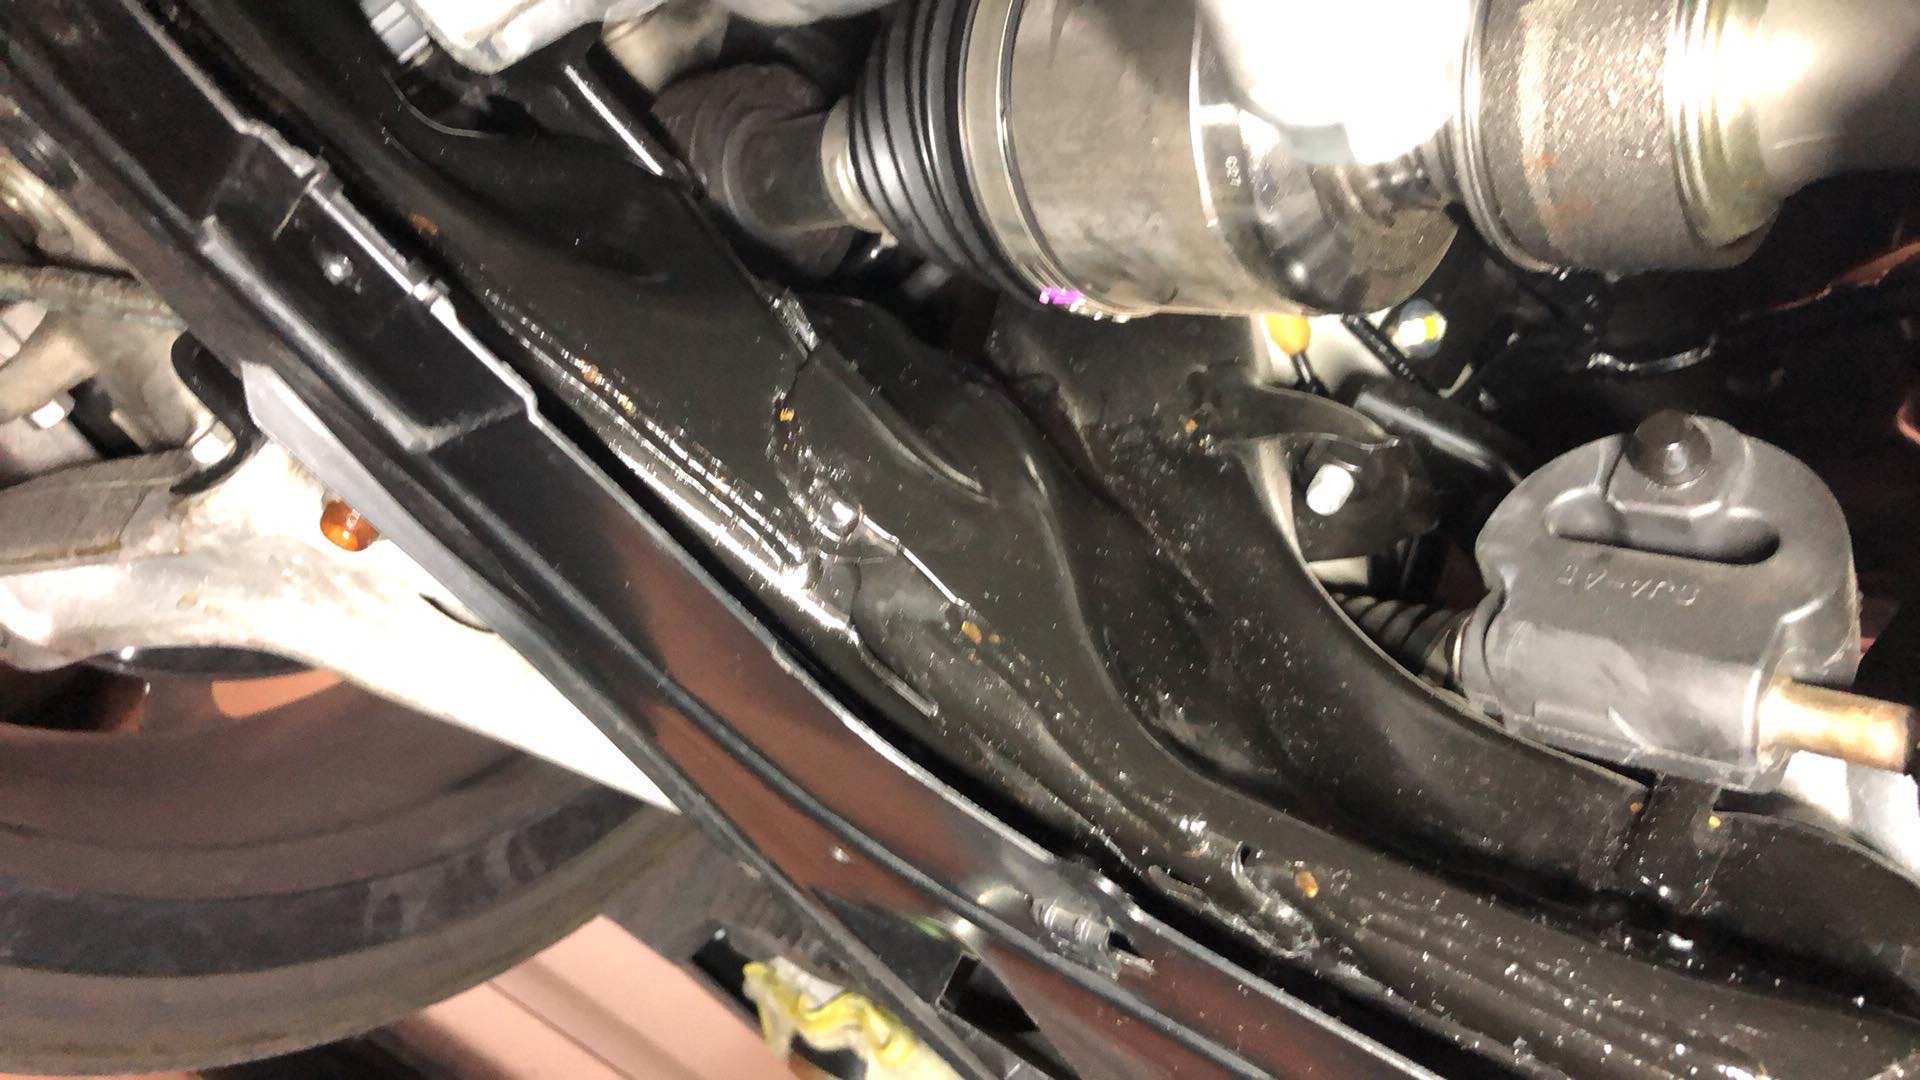 Honda Civic 10th gen Small rust spots on subframe B12EB54A-9522-4395-86B4-29464F33350B